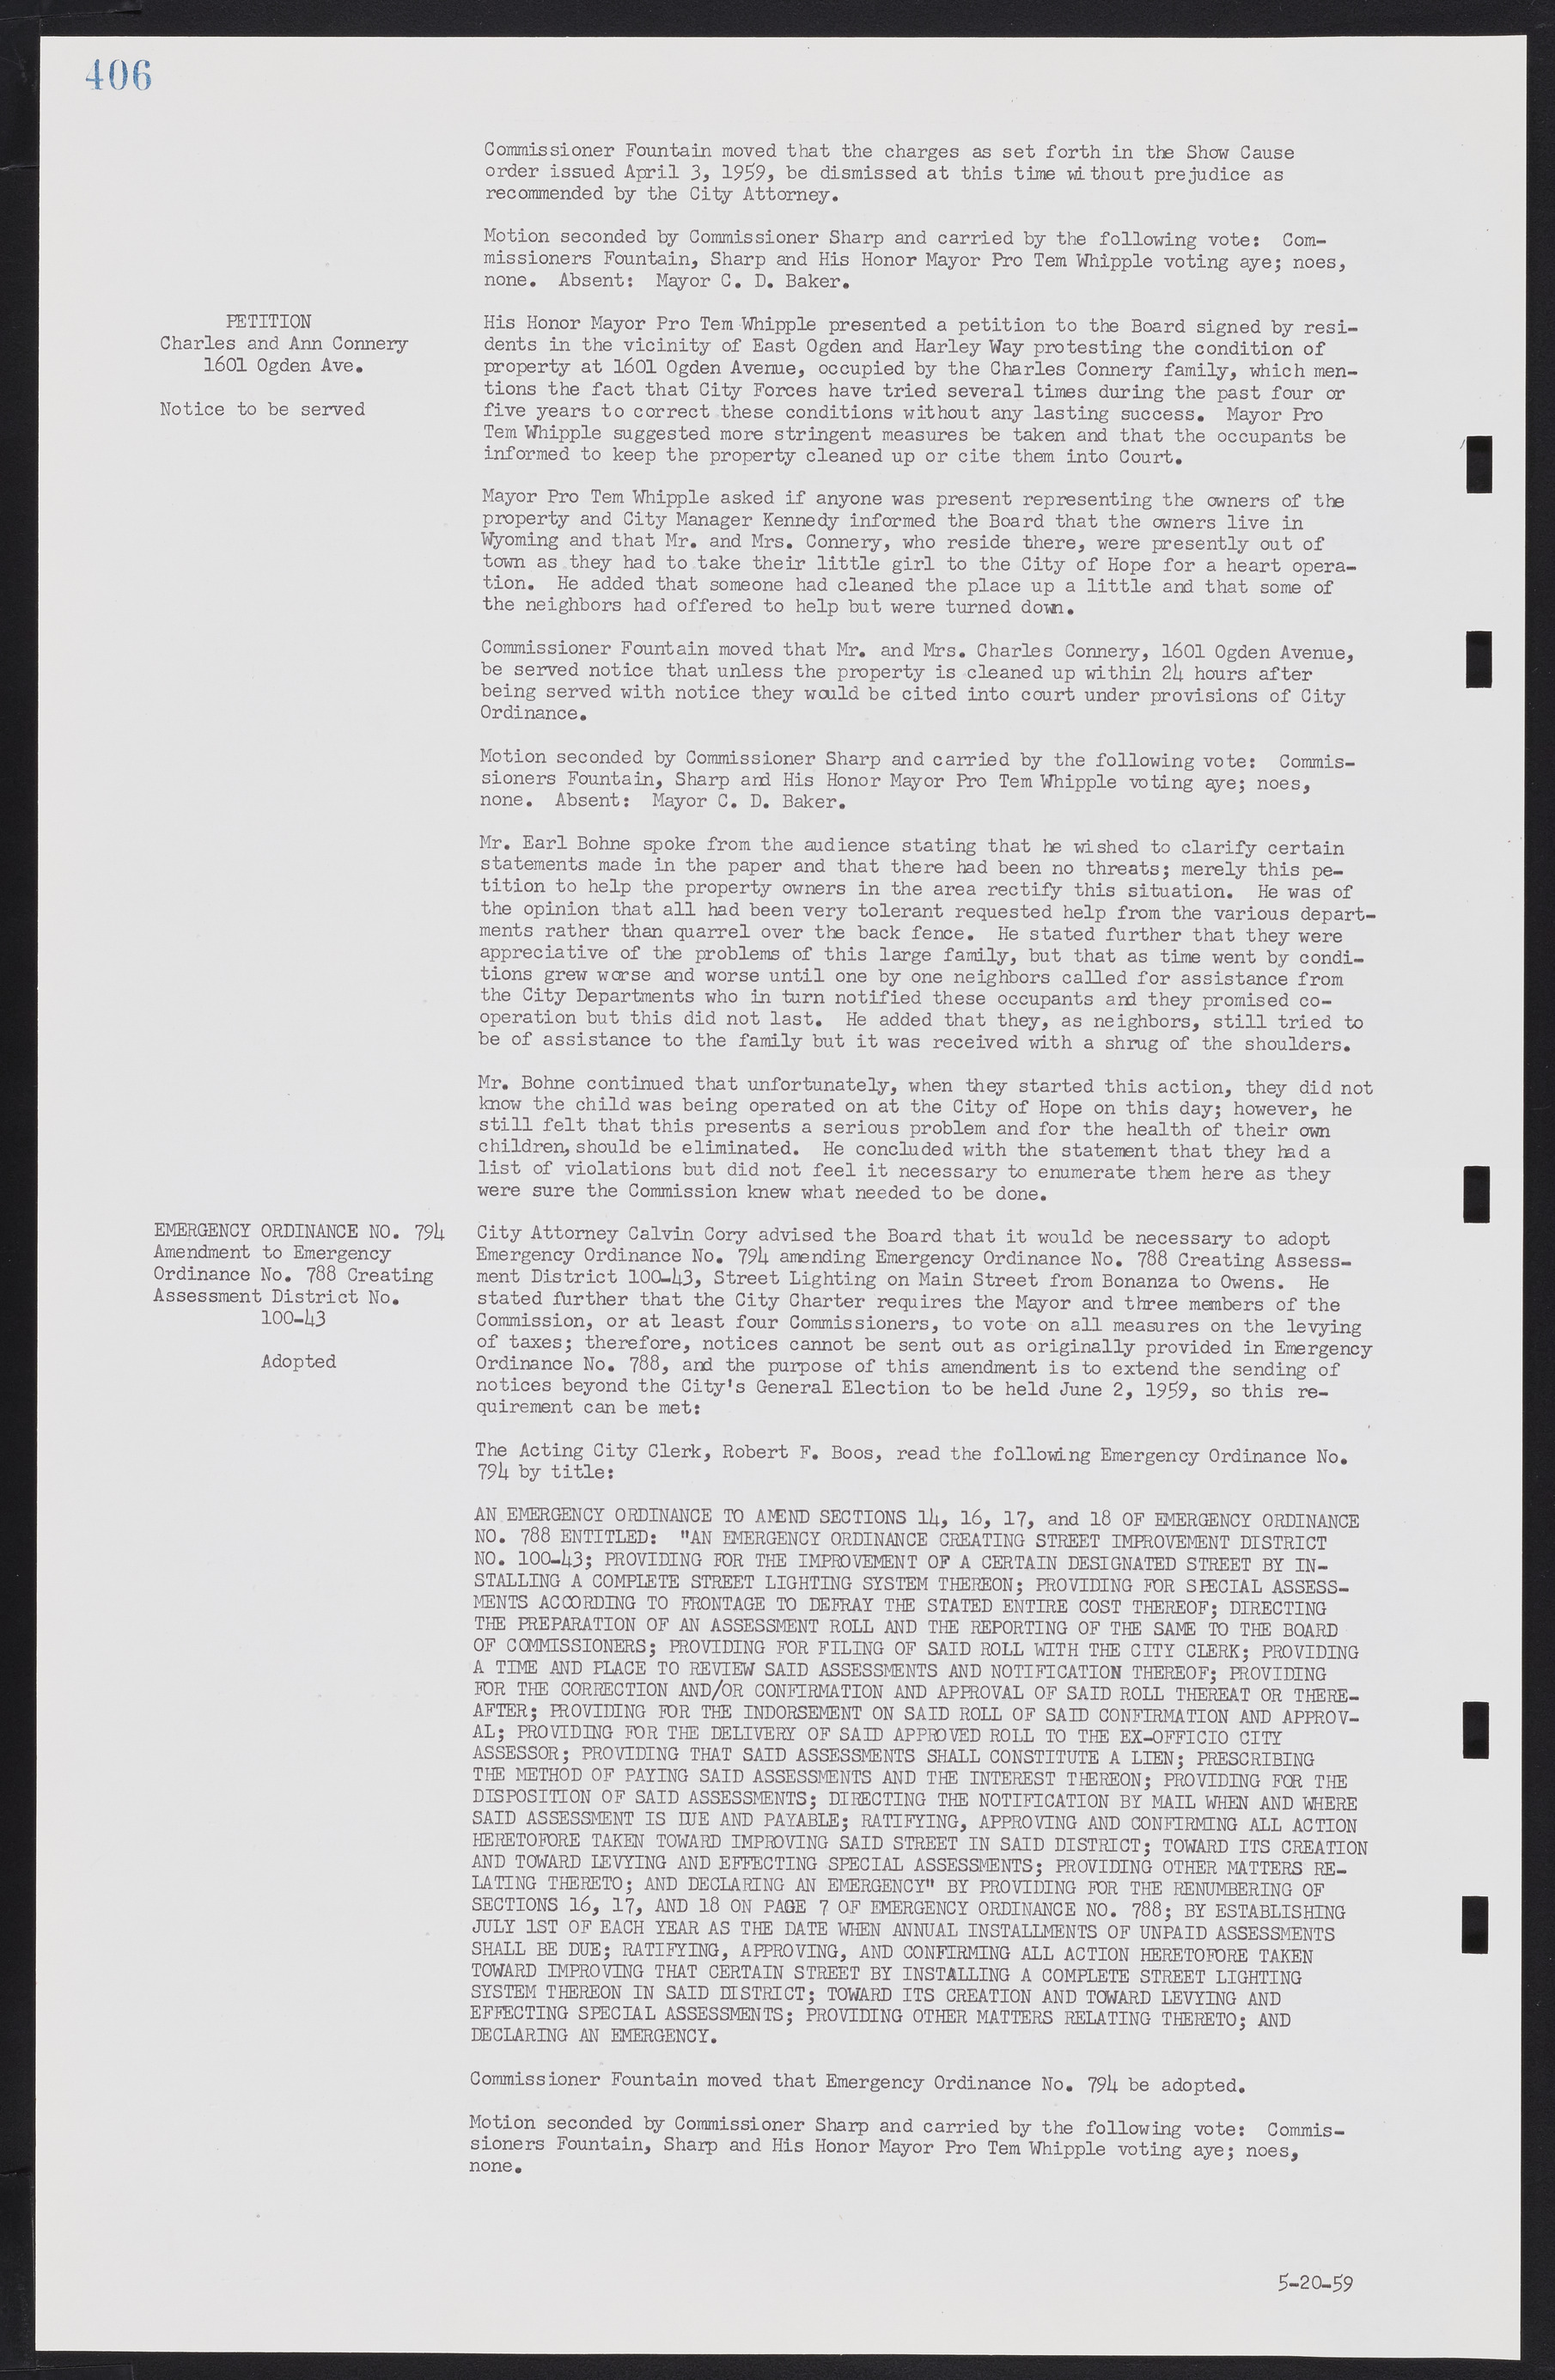 Las Vegas City Commission Minutes, November 20, 1957 to December 2, 1959, lvc000011-442